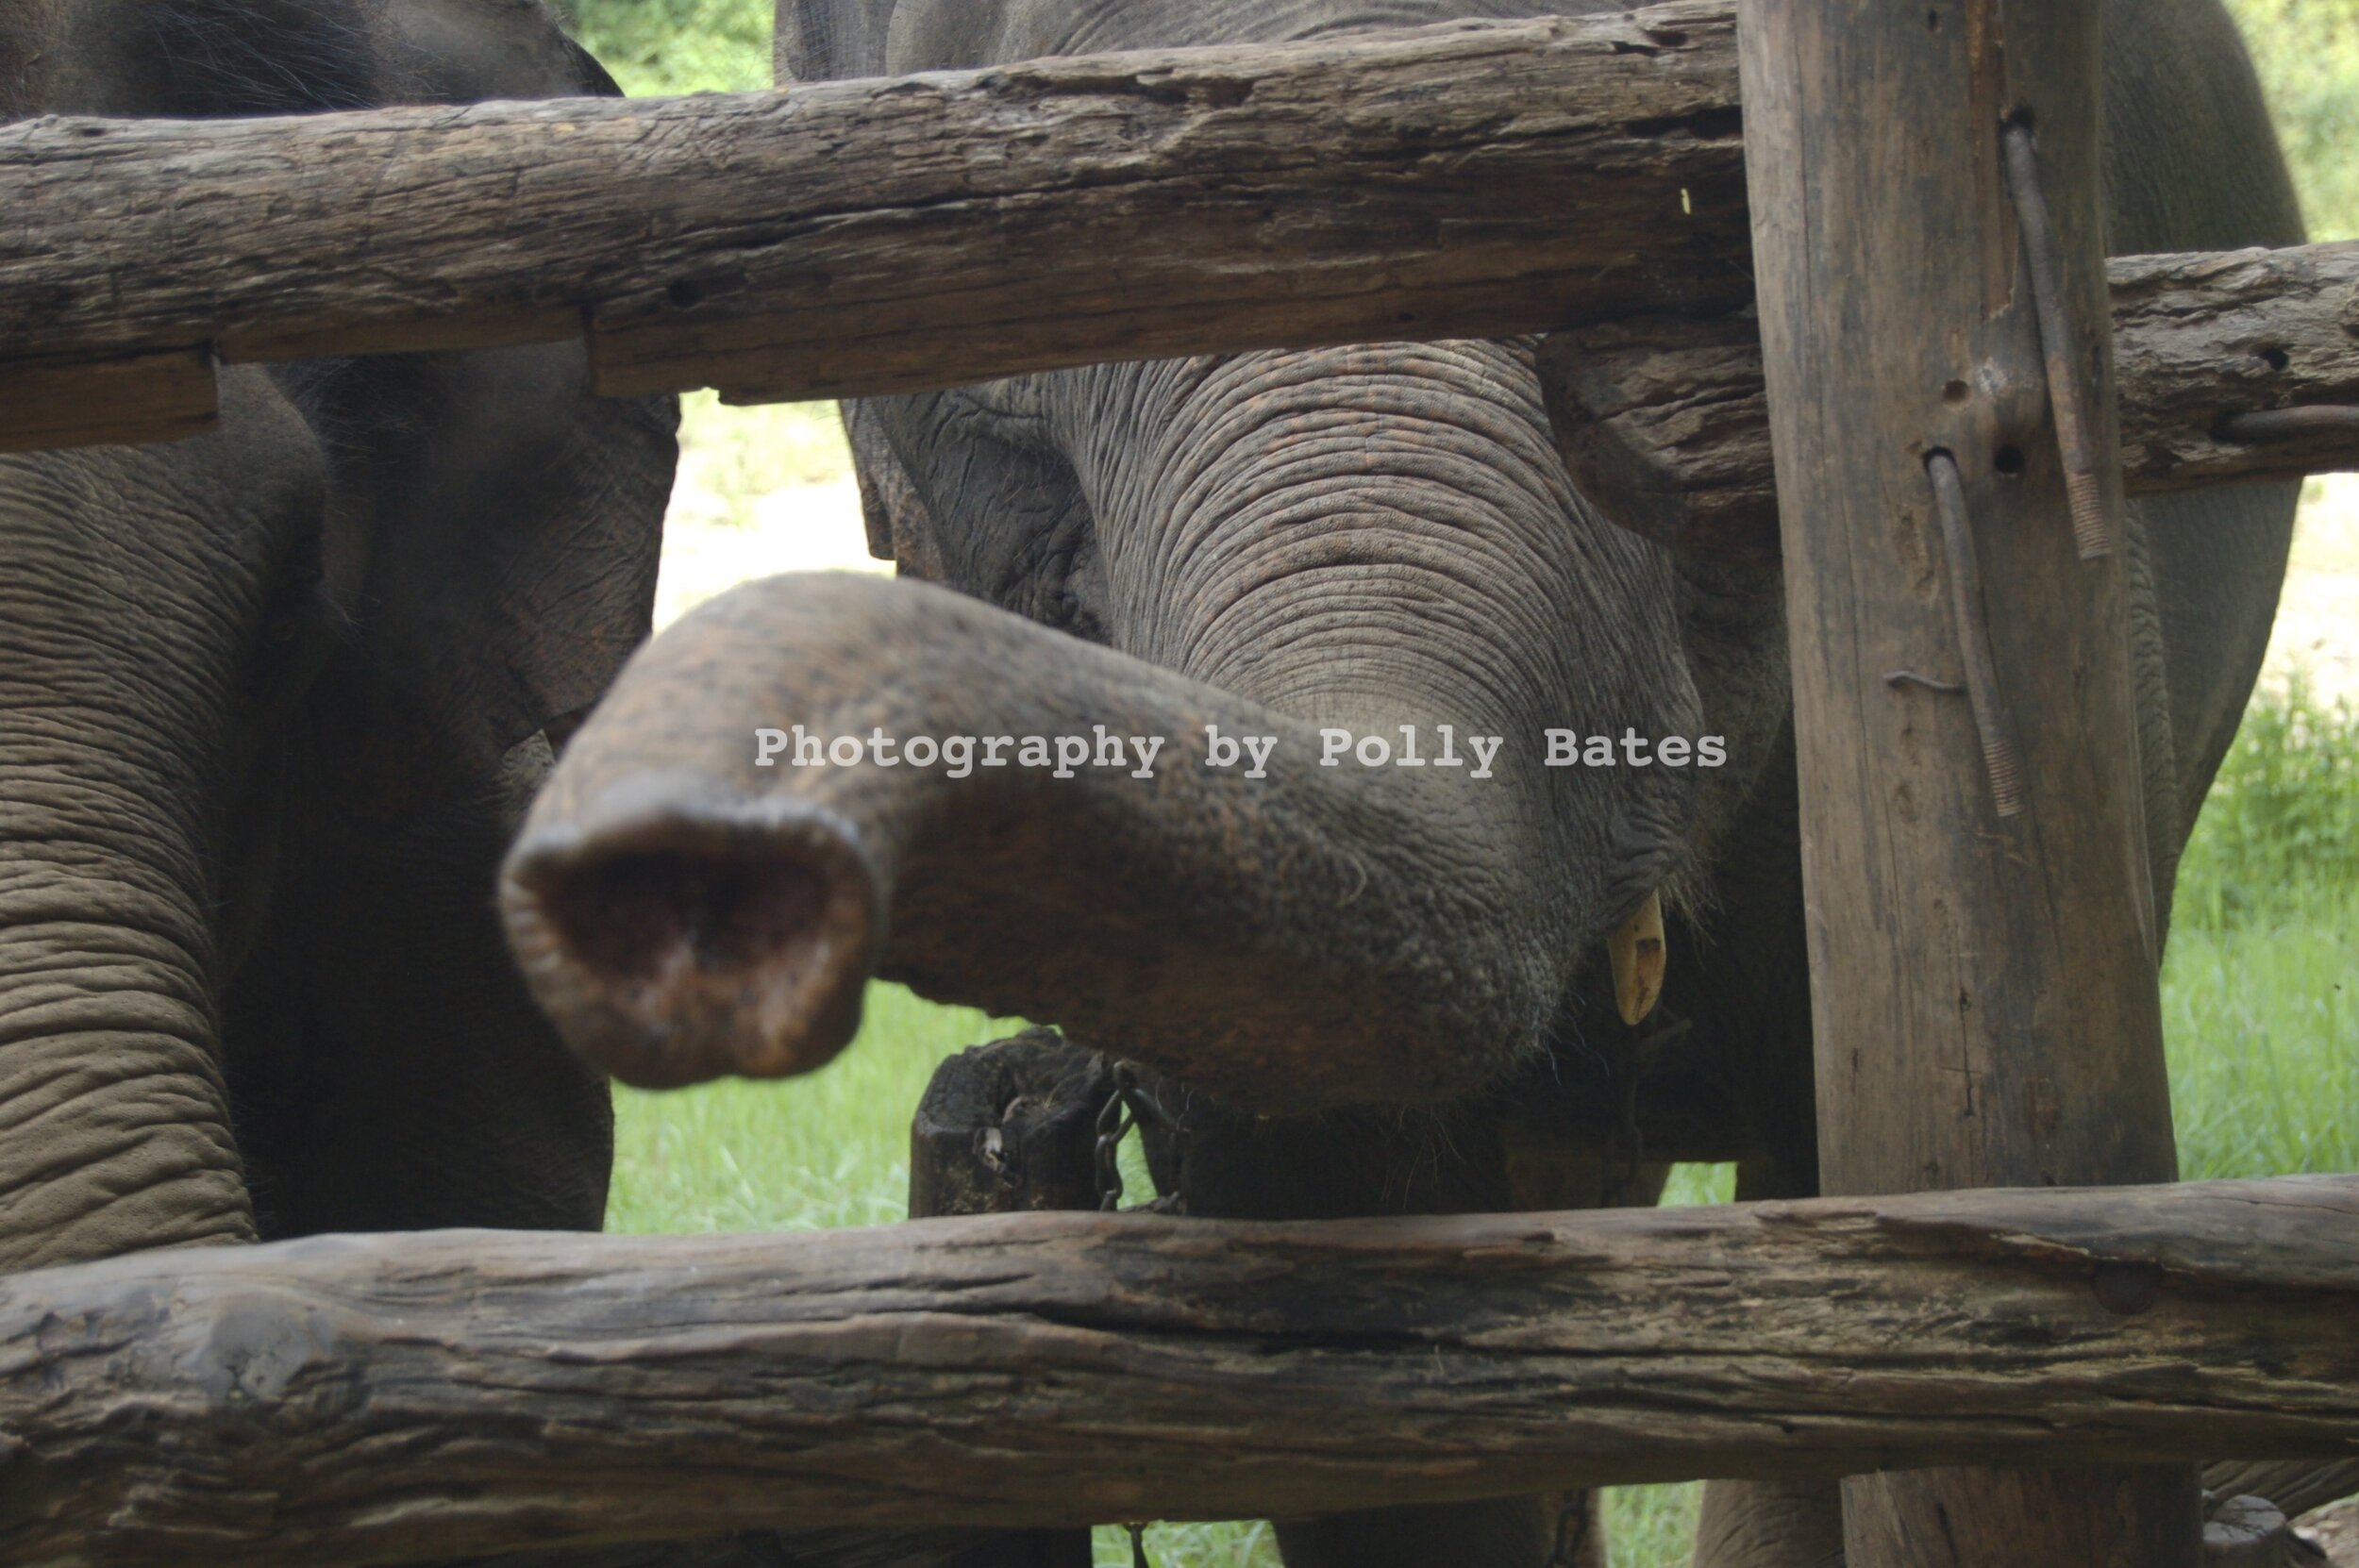 Polly Bates Elephant Photography 2.jpg